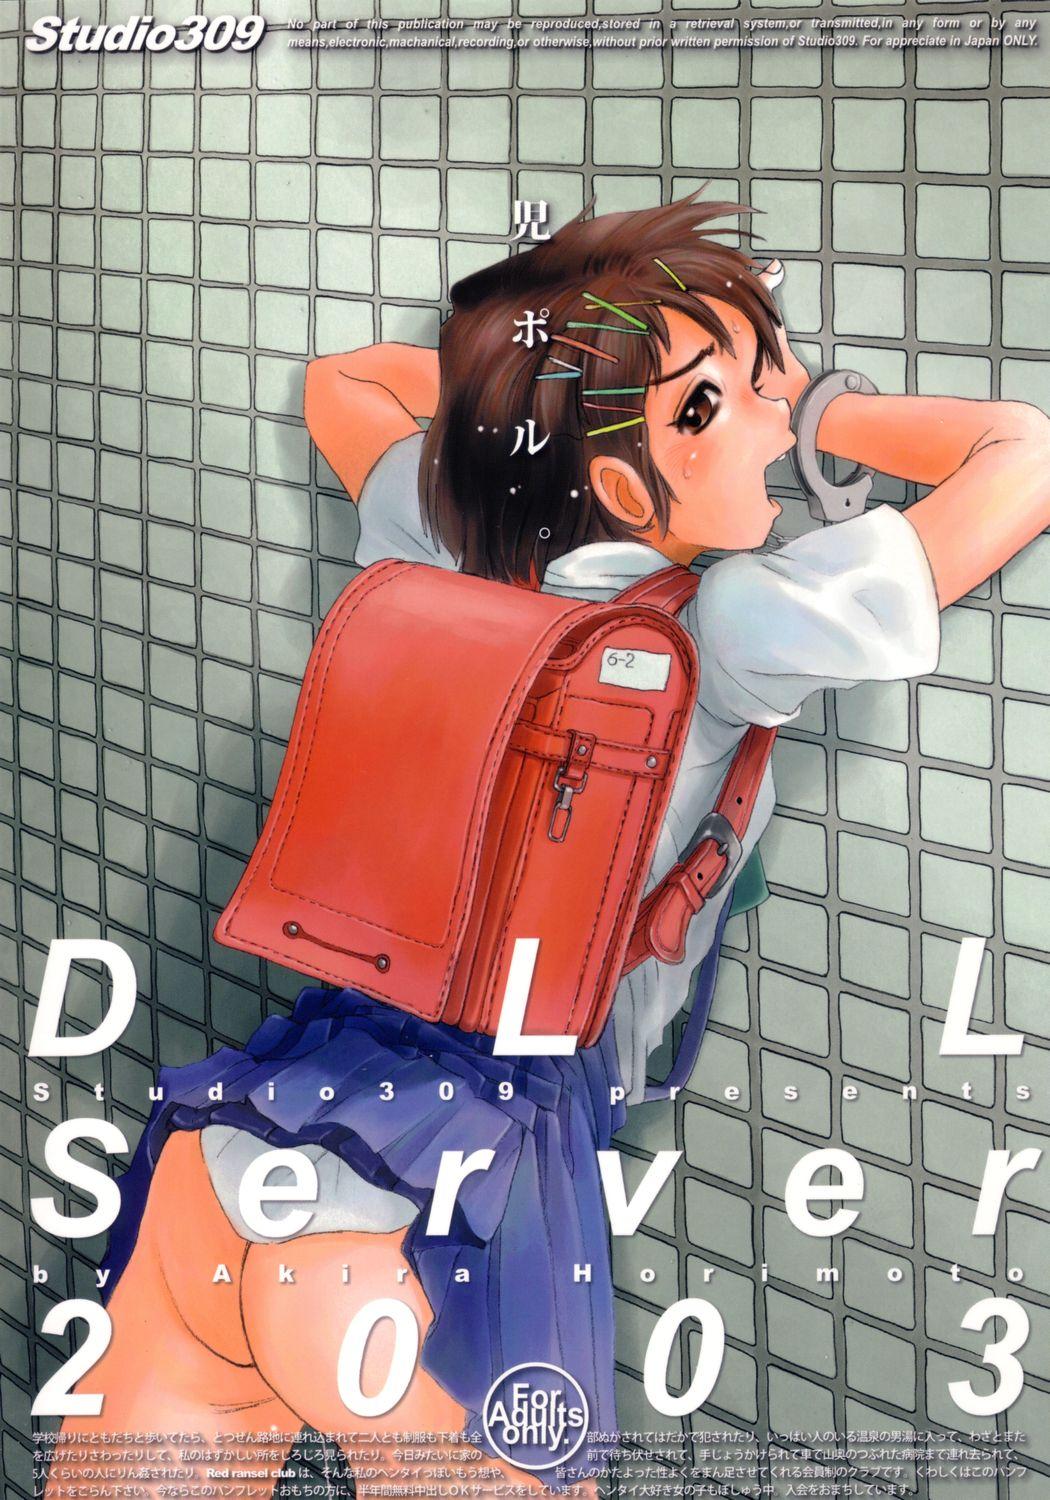 DLL Server 2003 0